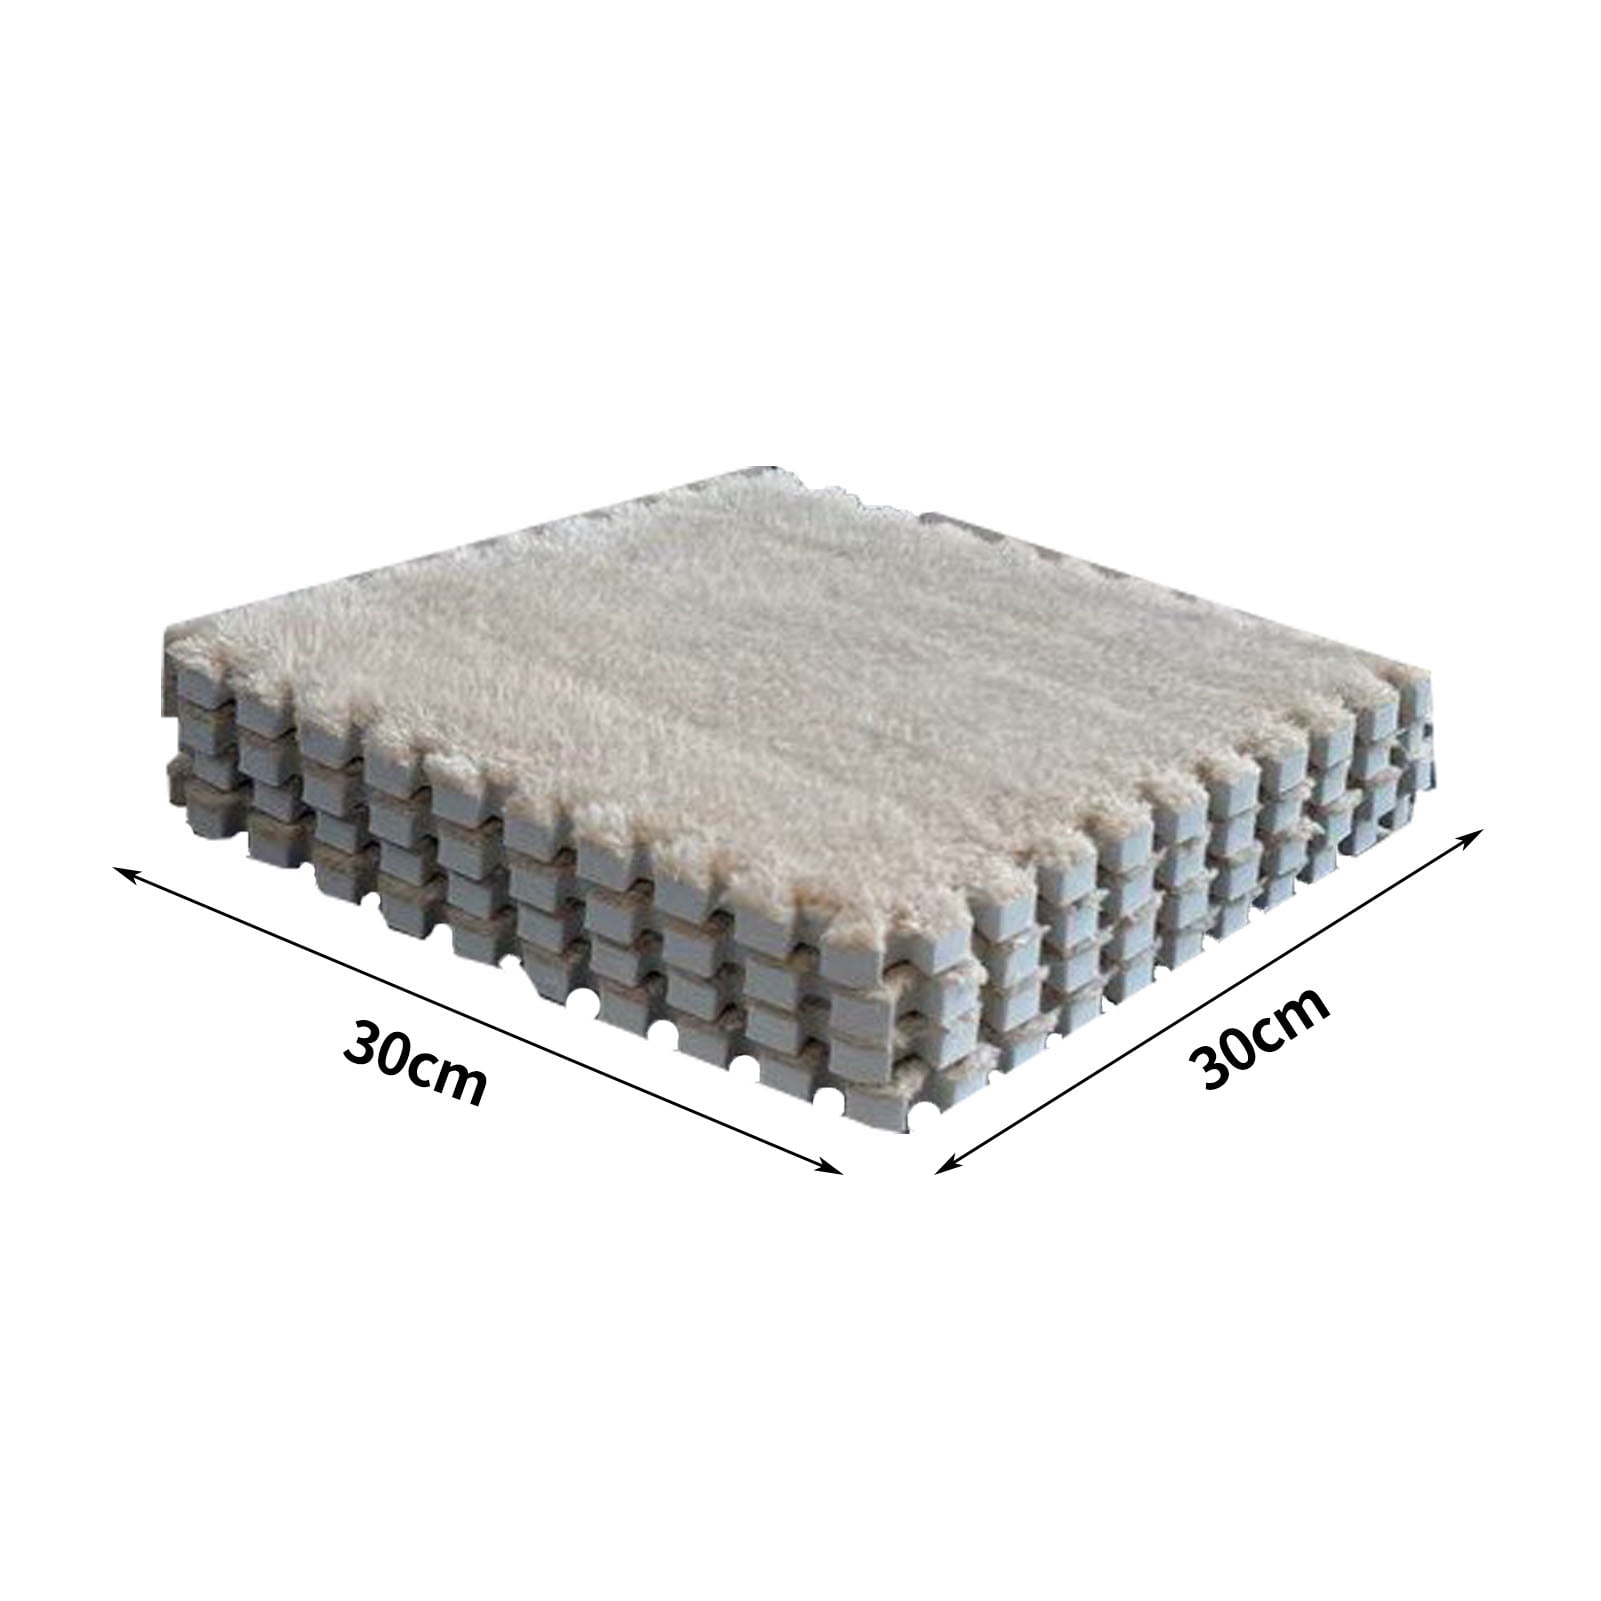  36 Pcs Plush Foam Floor Mat Square Interlocking Carpet Tiles  with Border Fluffy Play Mat Floor Tiles Soft Climbing Area Rugs for Home  Playroom Decor, 12 x 12 x 0.4 Inch (